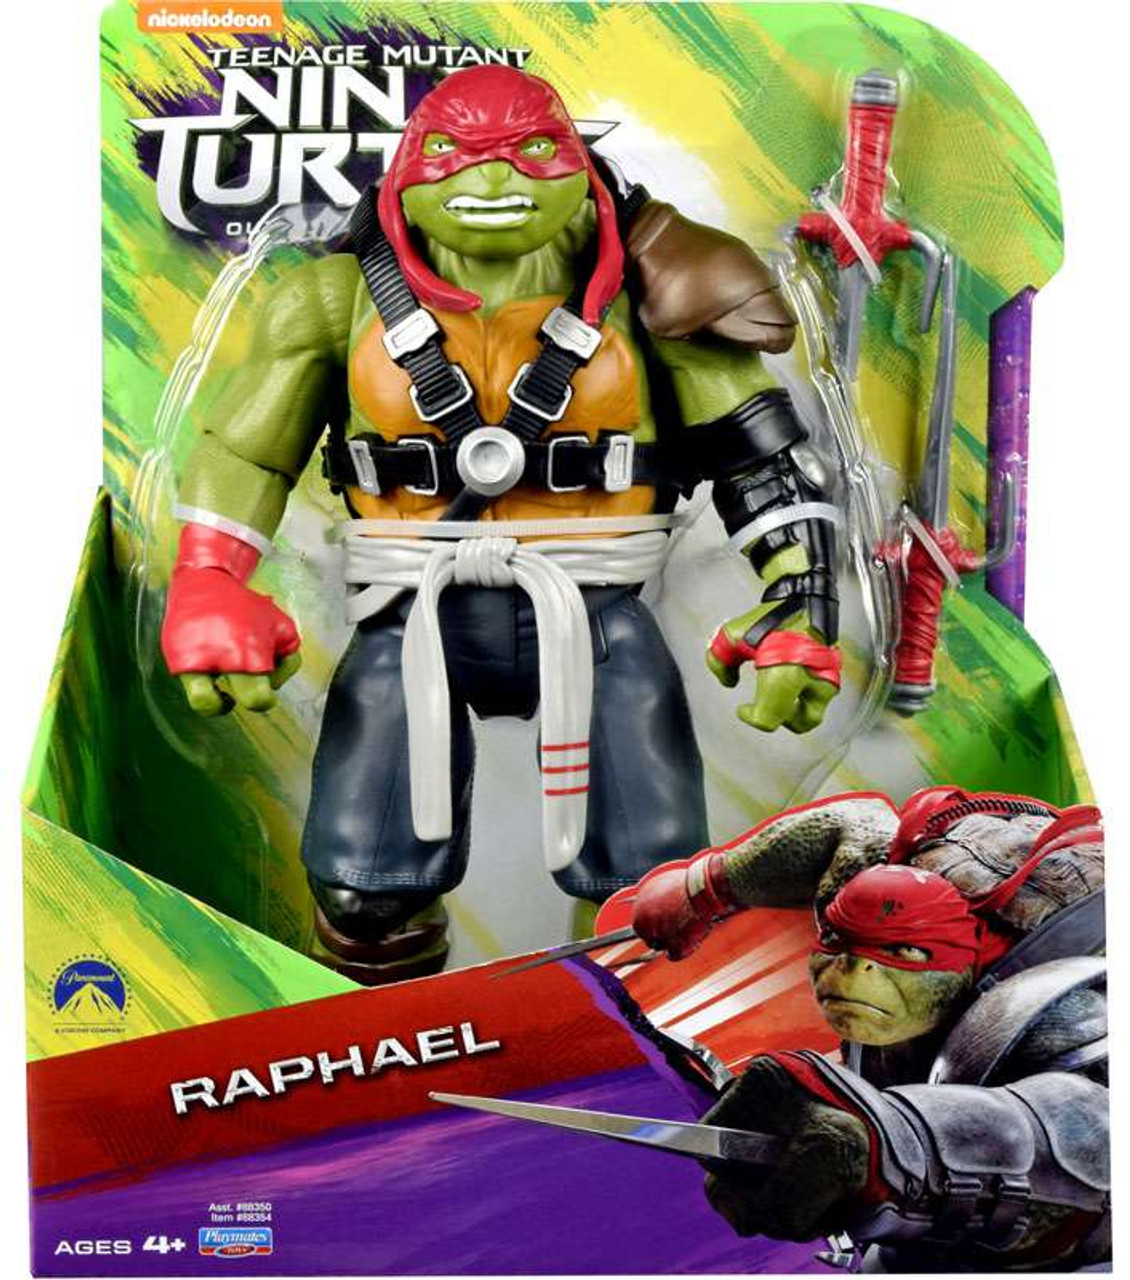 Teenage Mutant Ninja Turtles Out Of The Shadows Raphael 11 Action Figure 11 Inch Playmates Toywiz 2021